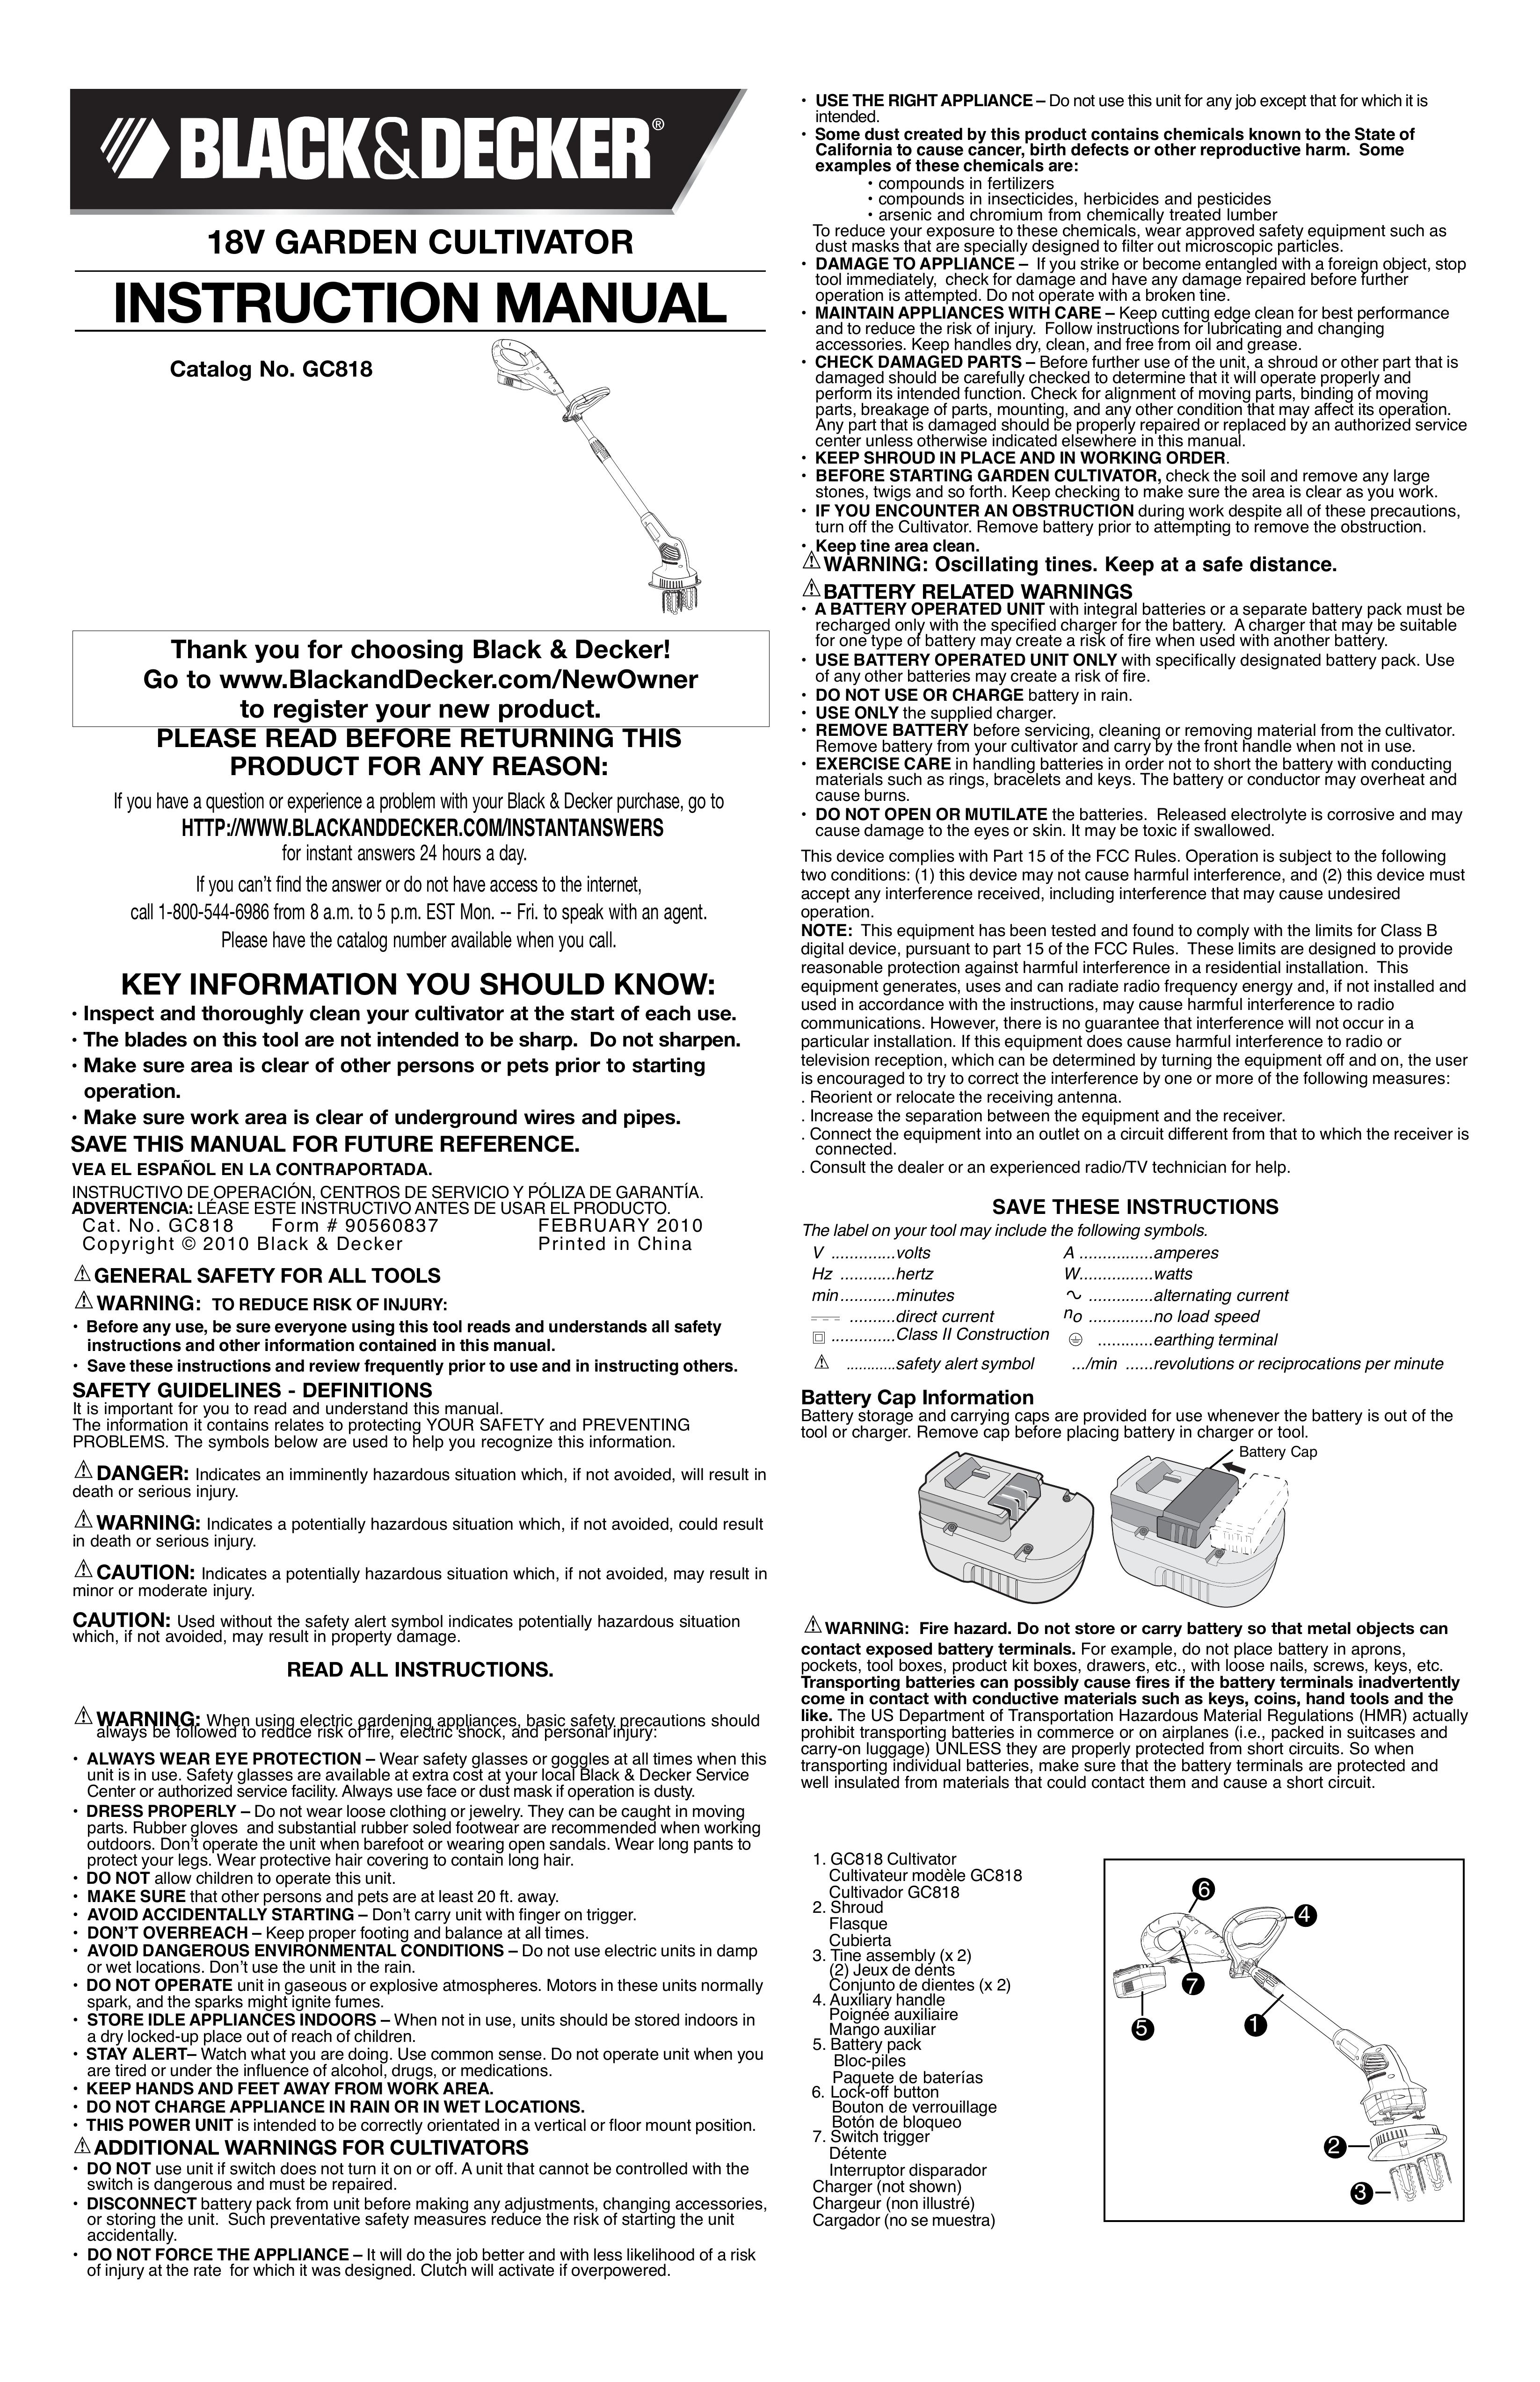 Black & Decker GC818B Cultivator User Manual